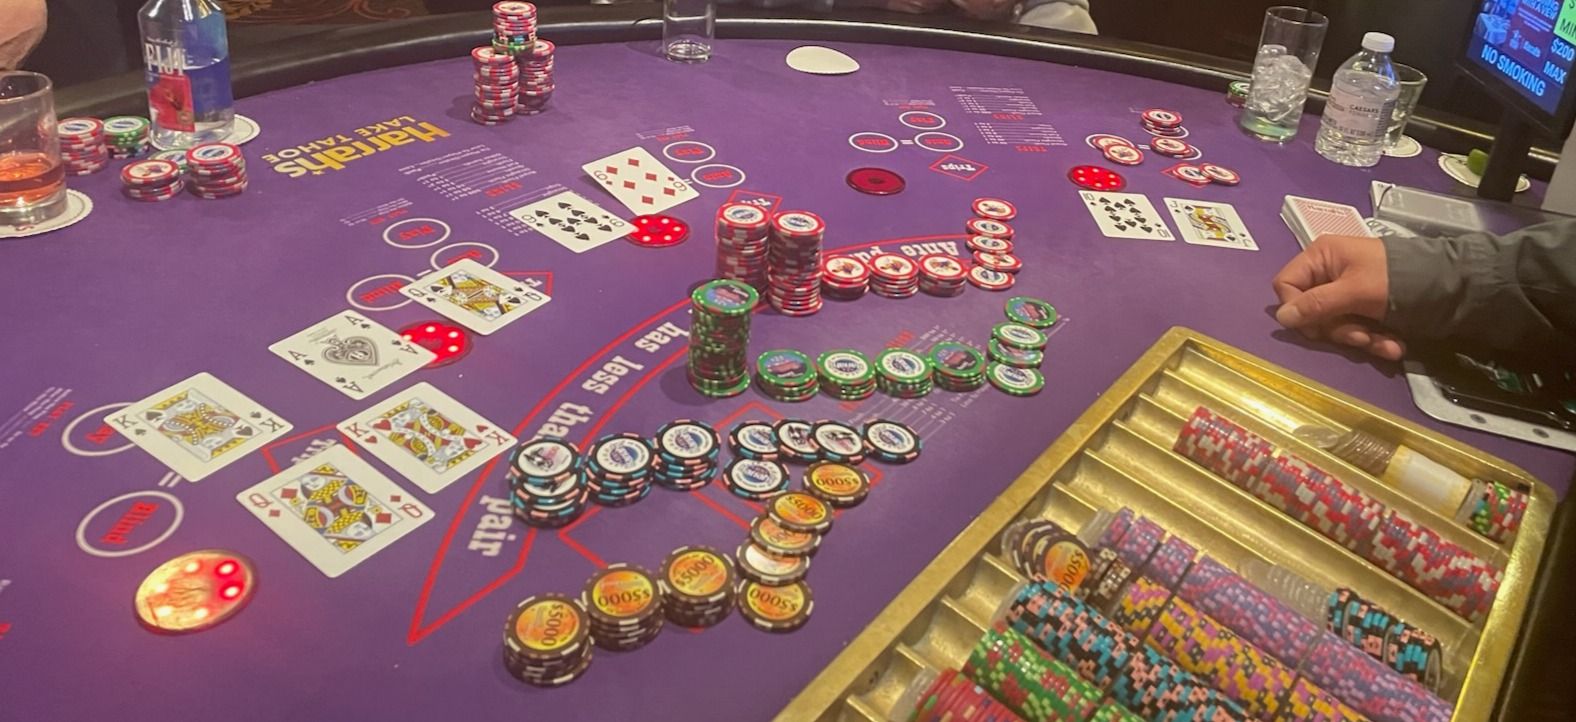 Jackpot Las Vegas Casinos Pay Out Four 400K Wins